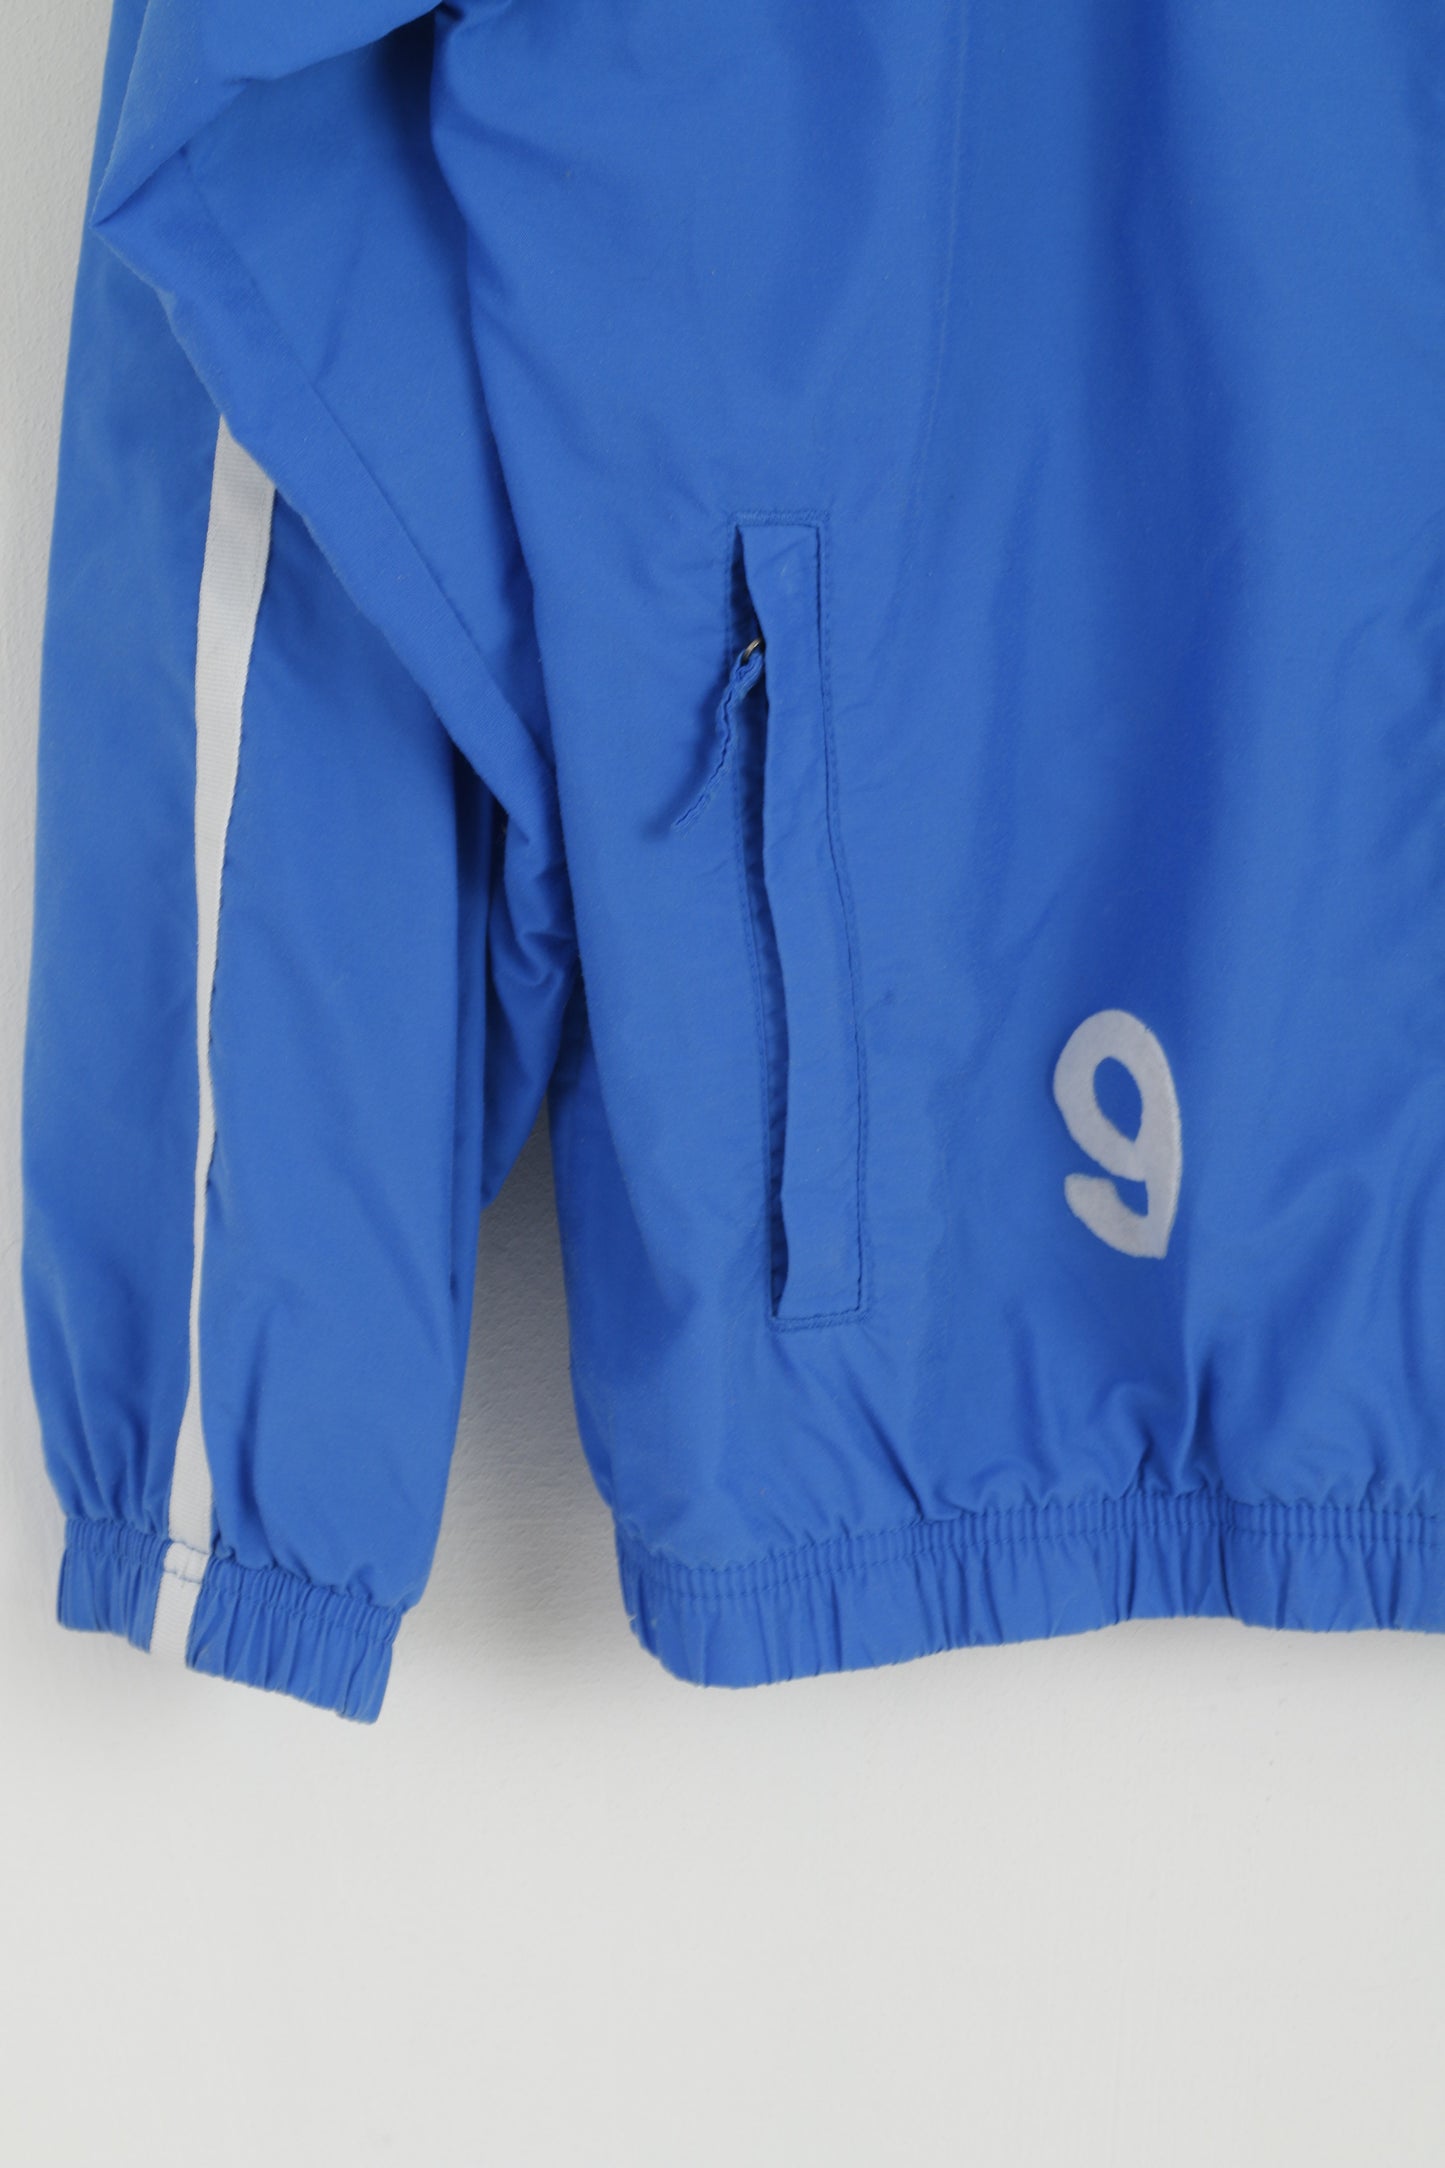 Nike Youth 164 - 176 Jacket Blue Nylon Activewear Training Sport Zip Up #9 Track Top